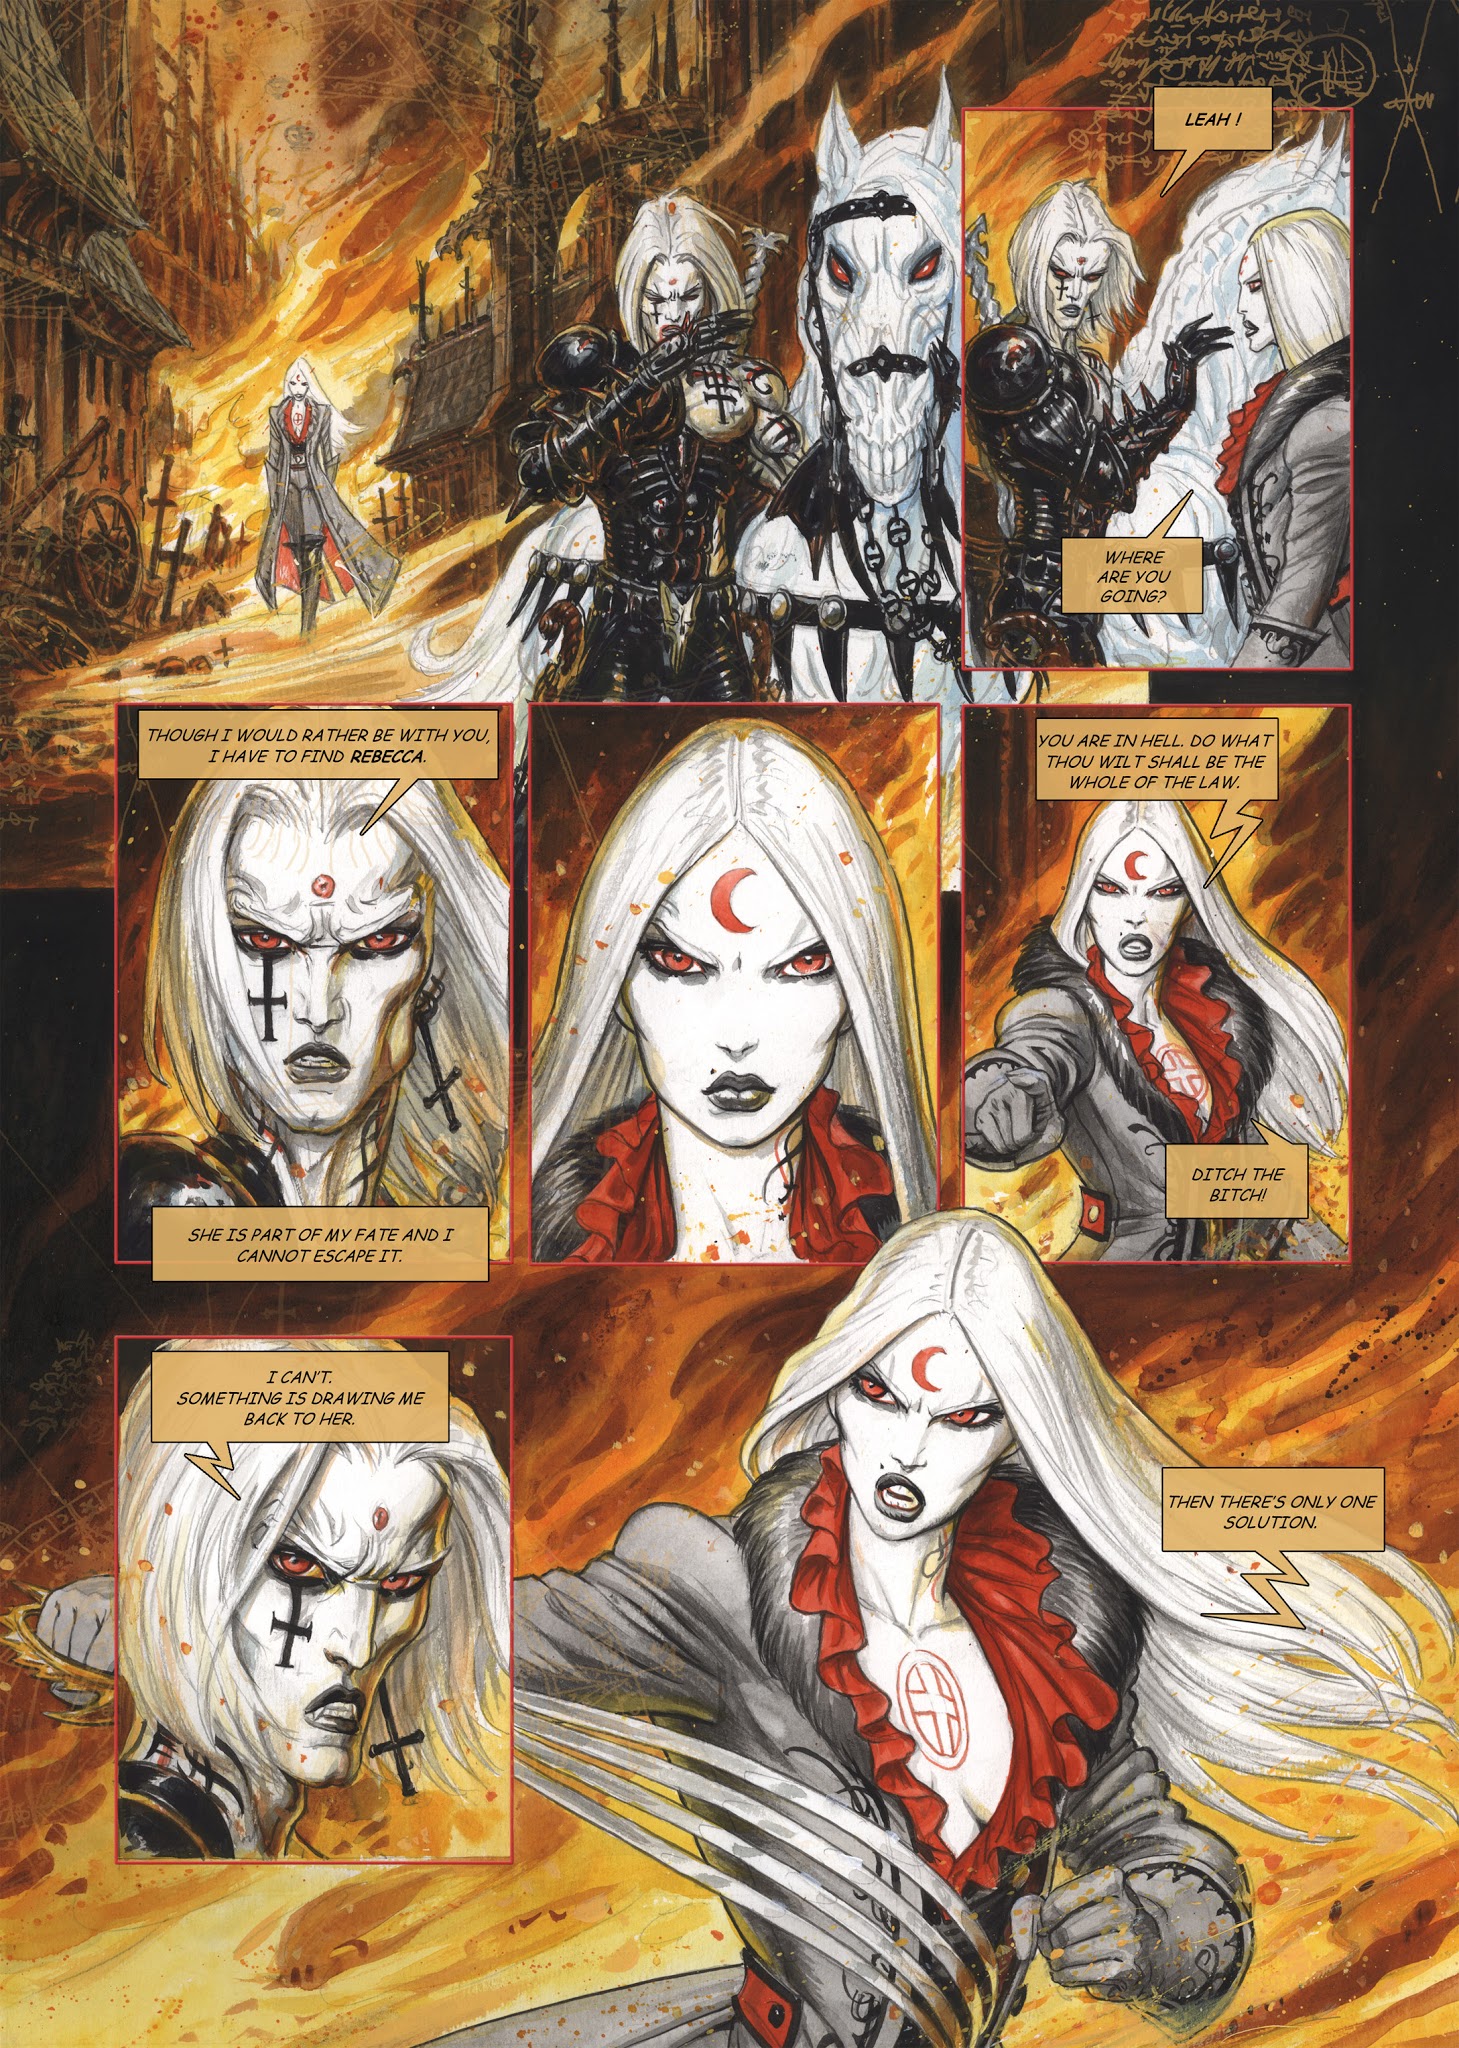 Requiem Vampire Knight Issue 11 | Read Requiem Vampire Knight Issue 11  comic online in high quality. Read Full Comic online for free - Read comics  online in high quality .| One million comics .Com